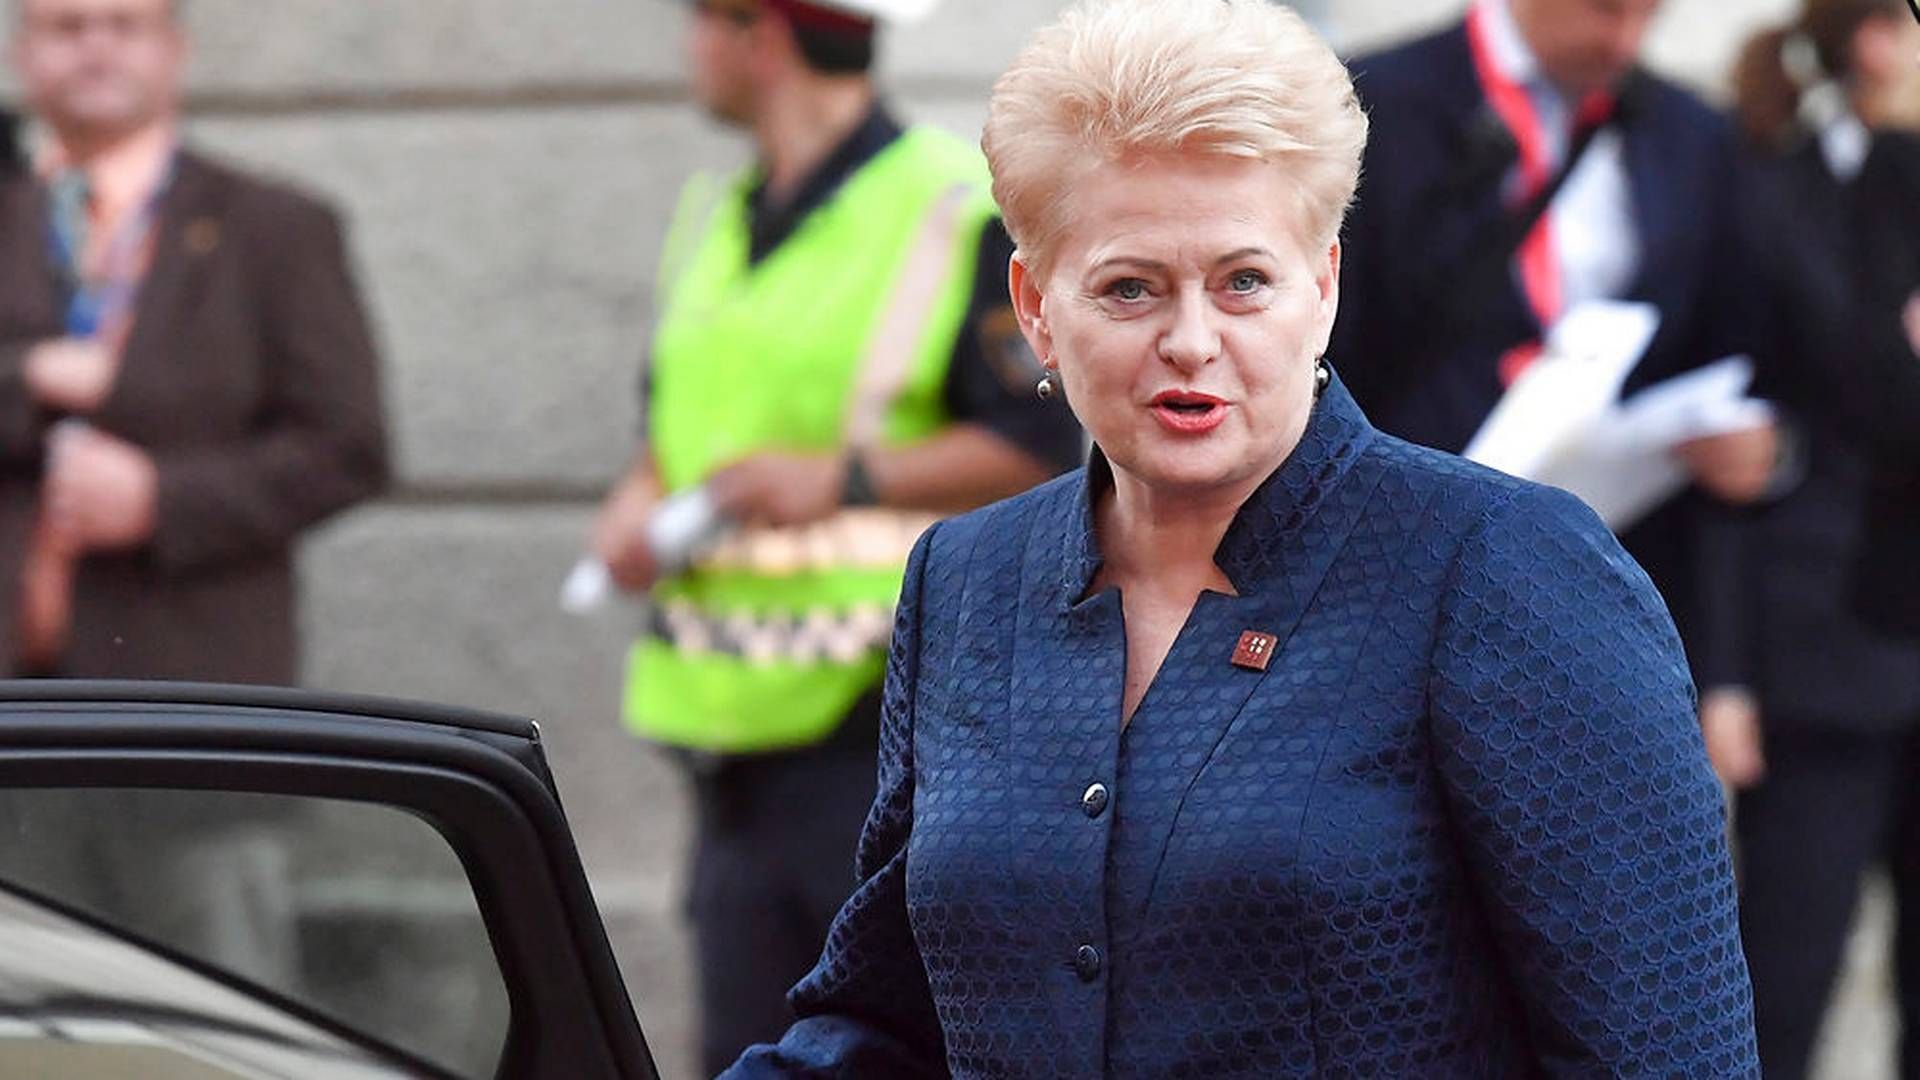 Litauens præsident, Dalia Grybauskaite | Foto: Ritzau Scanpix/AP Photo/Kerstin Joensson